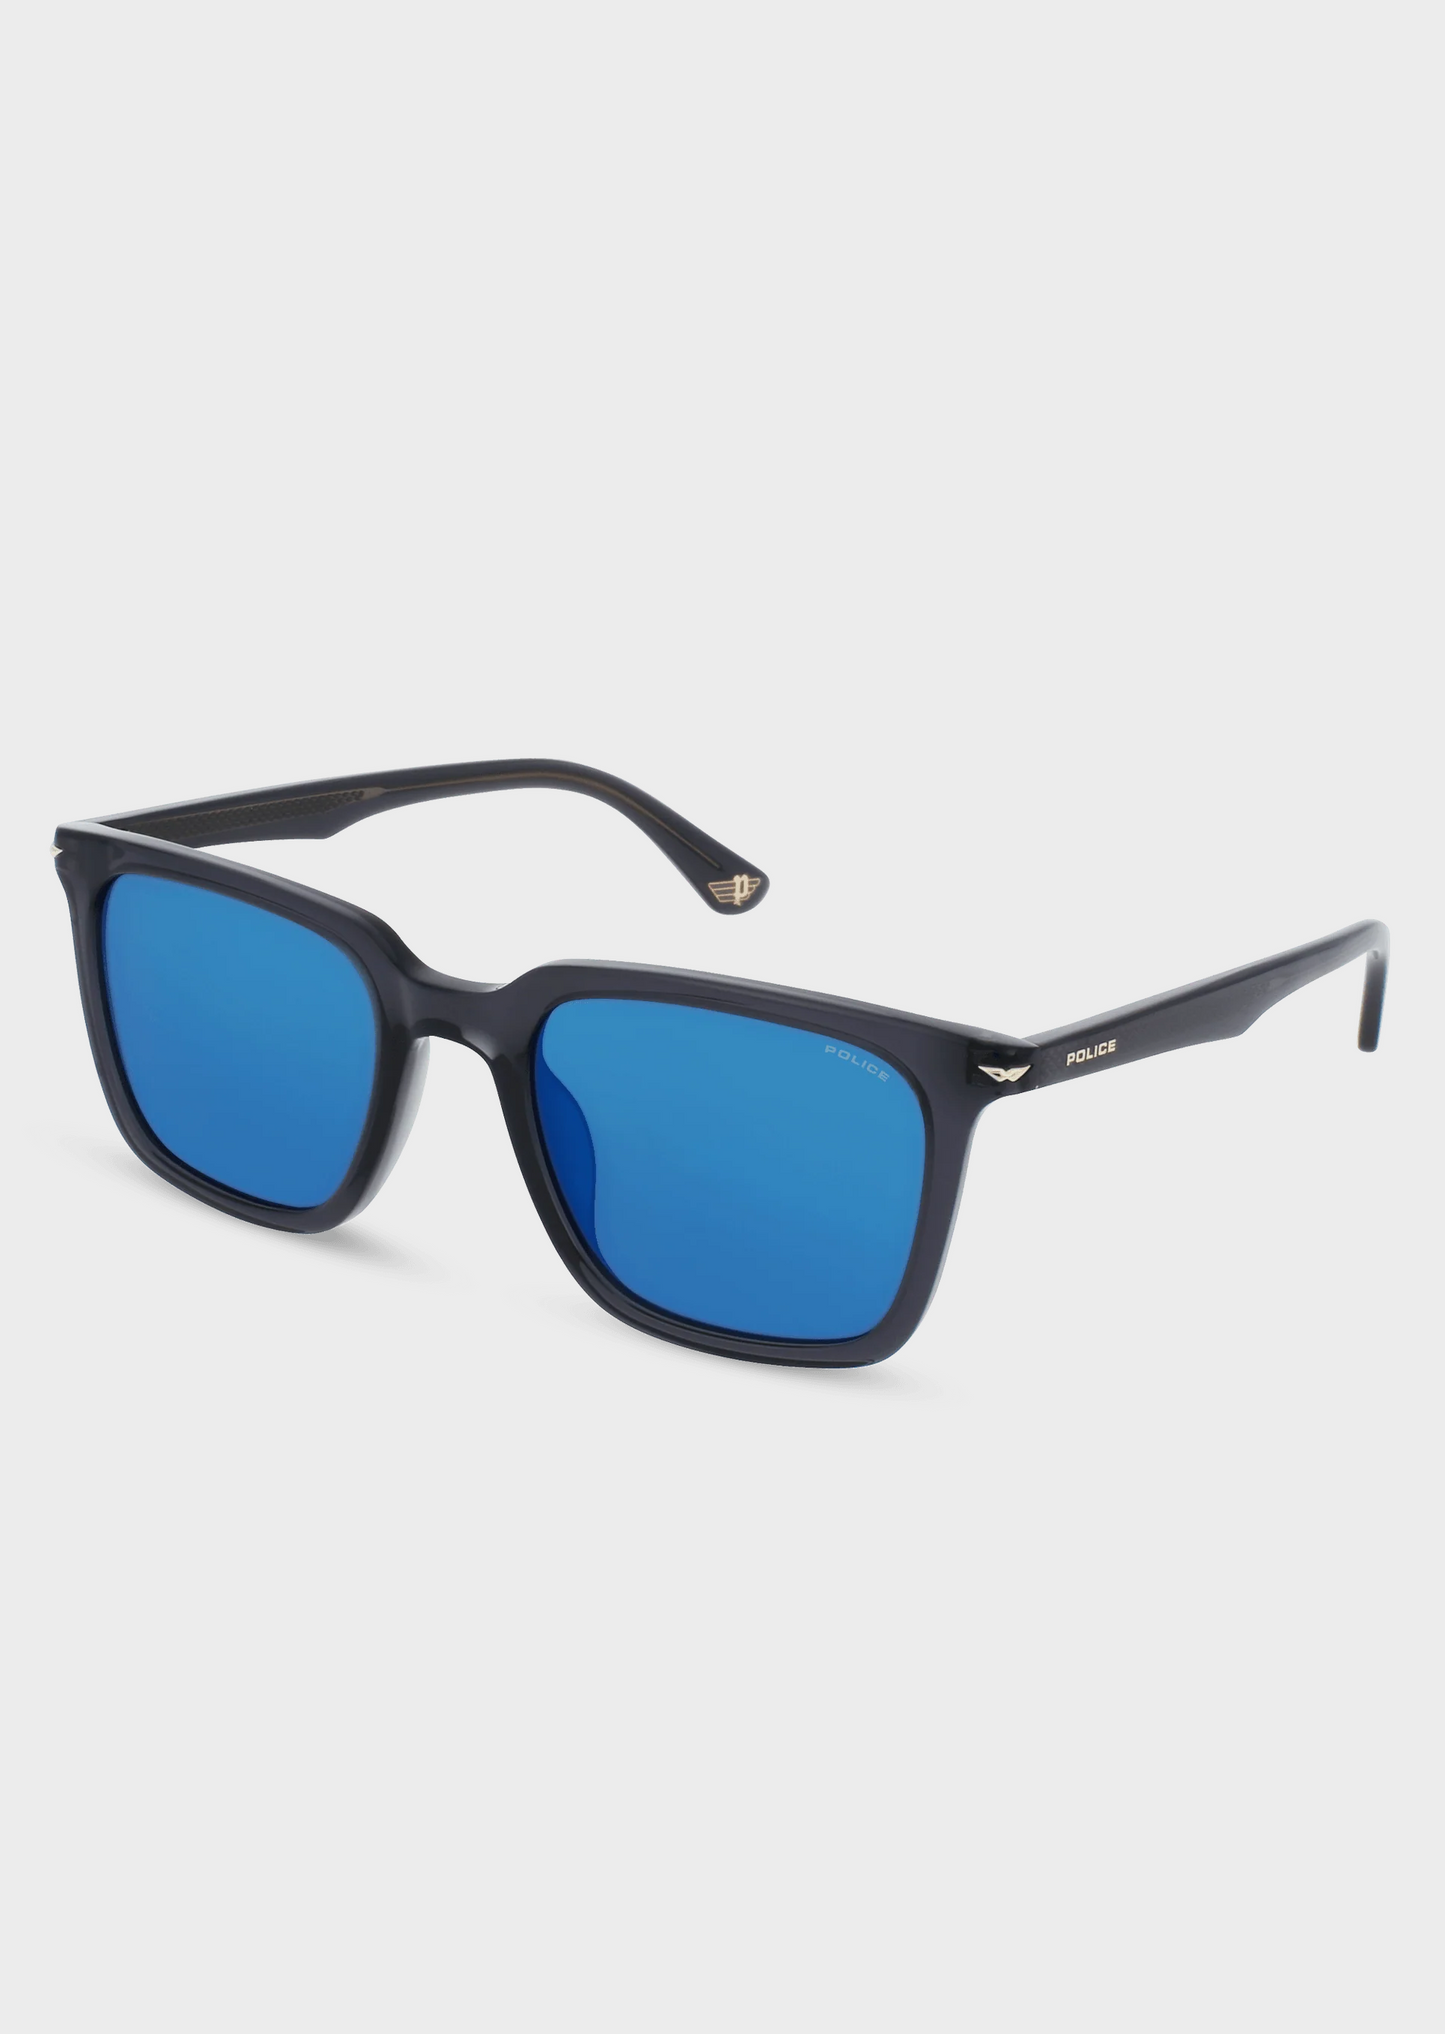 Men's Police SPLL80 705B Champ 4 Sunglasses